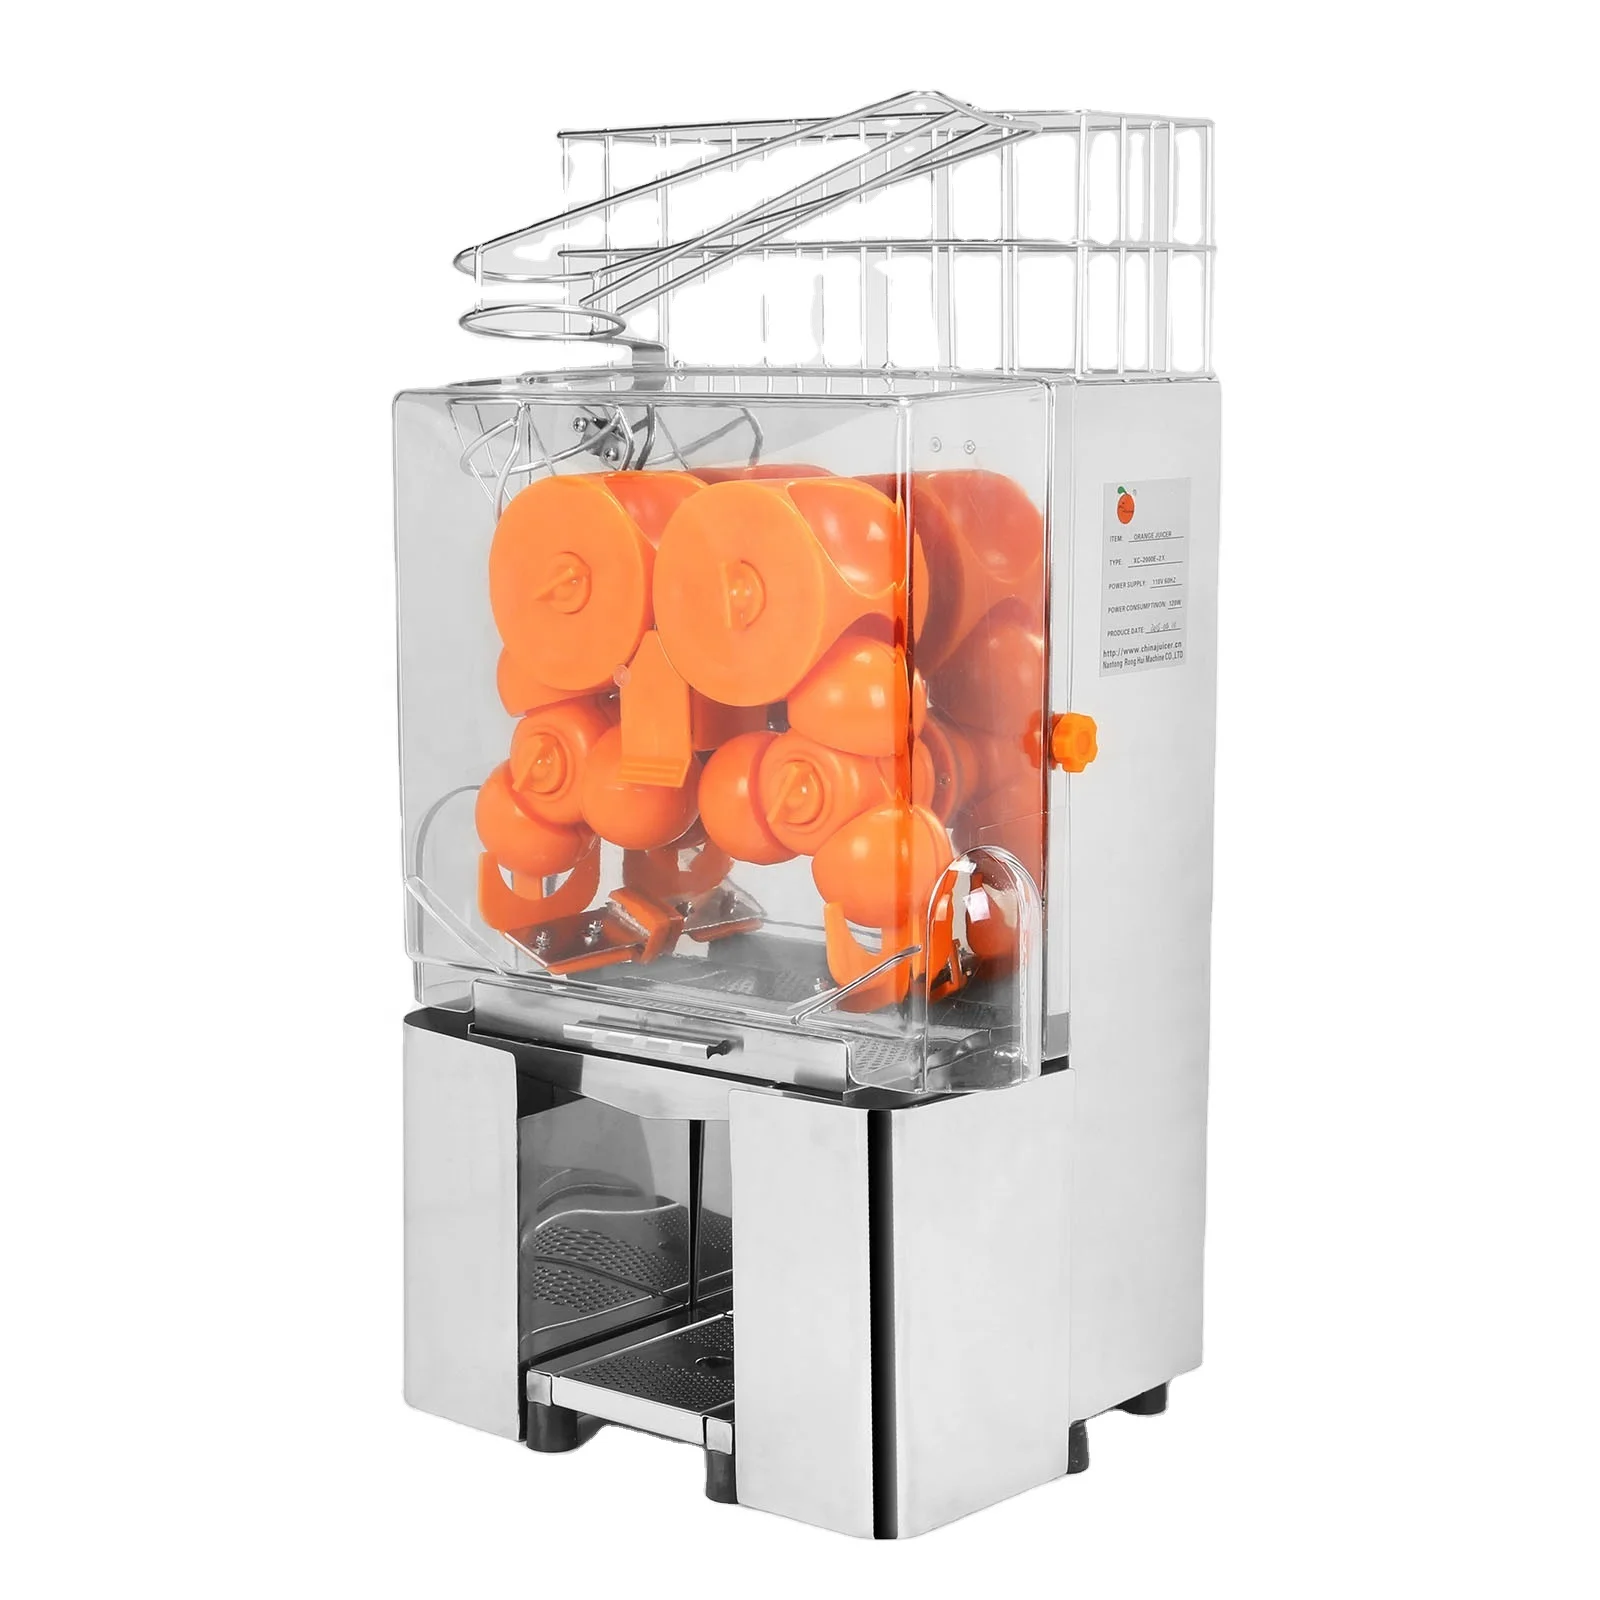 

Hot sale automatic fresh fruit juicer machine orange lemon citrus juice extractor orange juicer squeezer dispenser machine